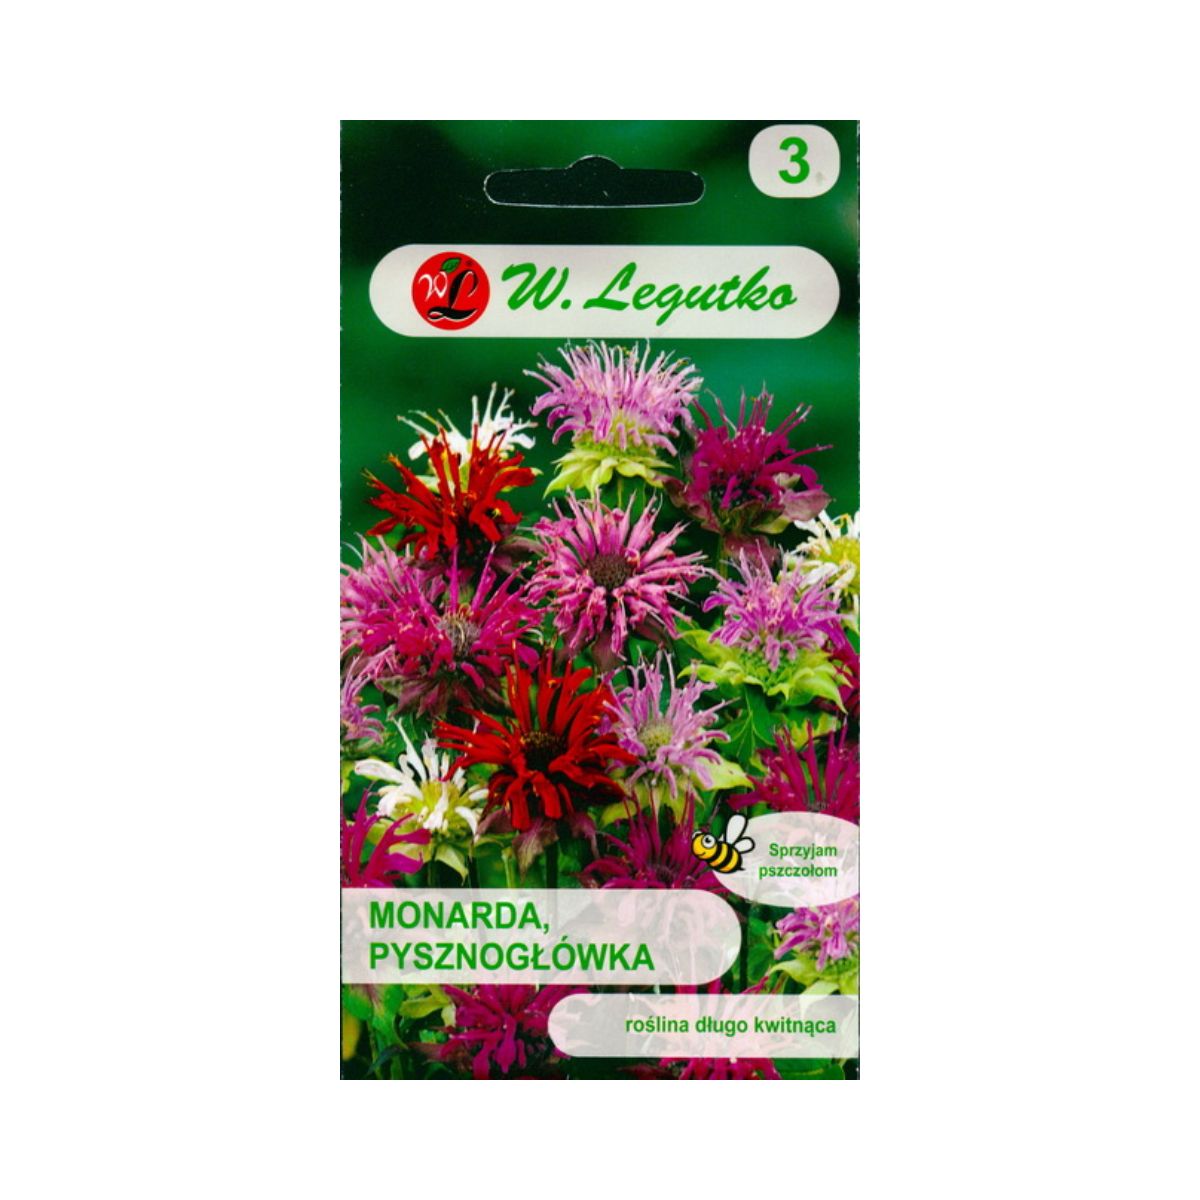 Seminte flori - Seminte de menta decorativa MIX, 0,1 gr, LEGUTKO, hectarul.ro